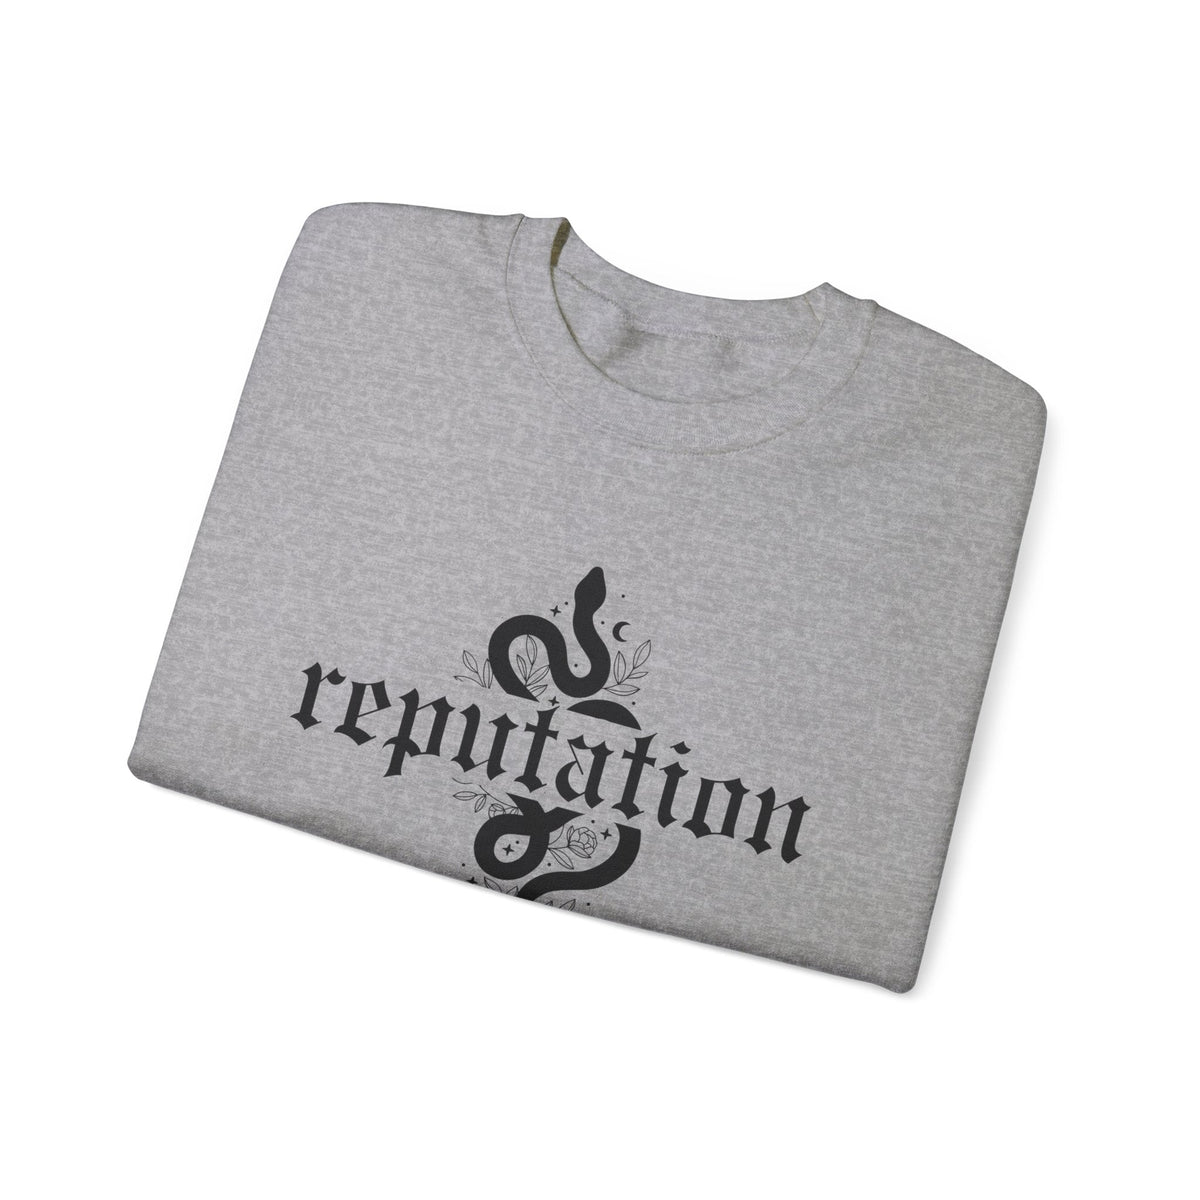 Reputation Sweatshirt | Swiftie Sweatshirts | Taylor Swift Merch Sweatshirt TheFringeCultureCollective